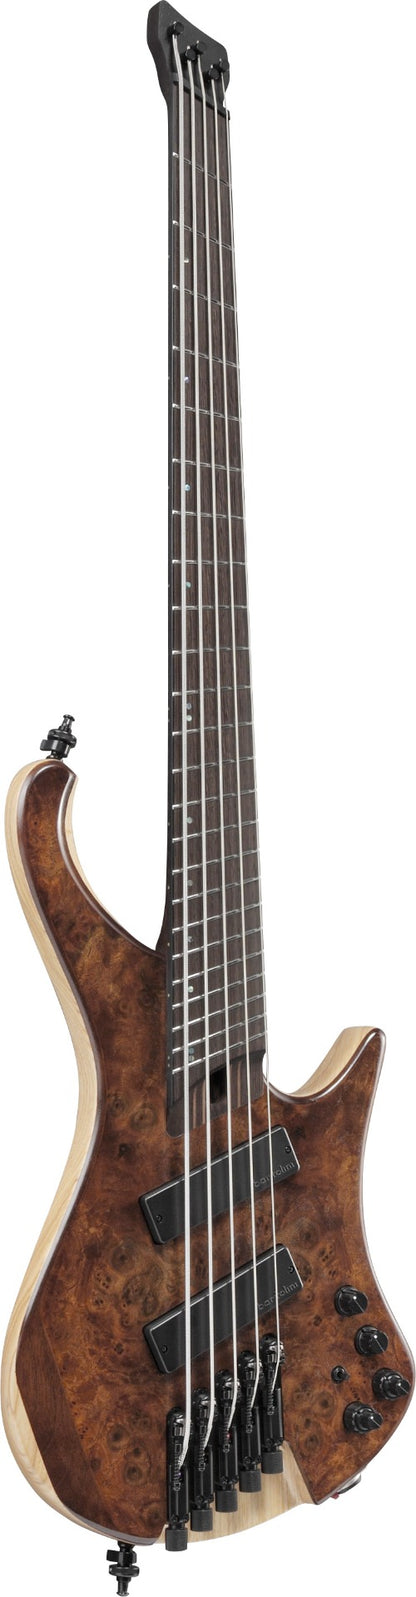 Ibanez EHB1265MSNMLEHB Headless Bass 5-String w/Bag - Natural Mocha Low Gloss